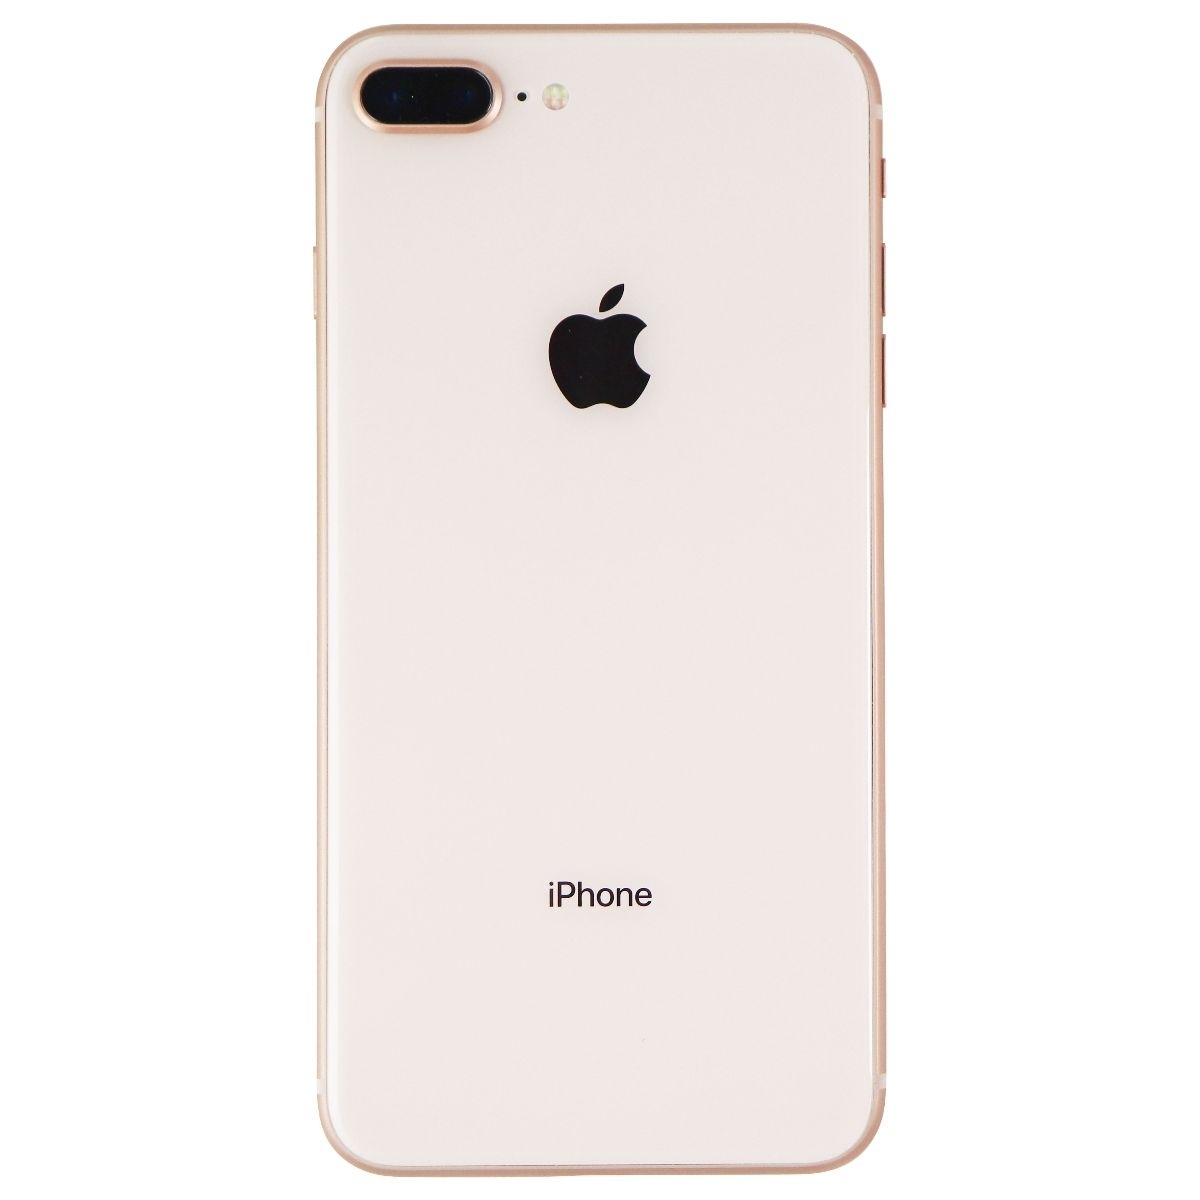 Apple IPhone 8 Plus Smartphone (A1897) Unlocked - 64GB / Gold